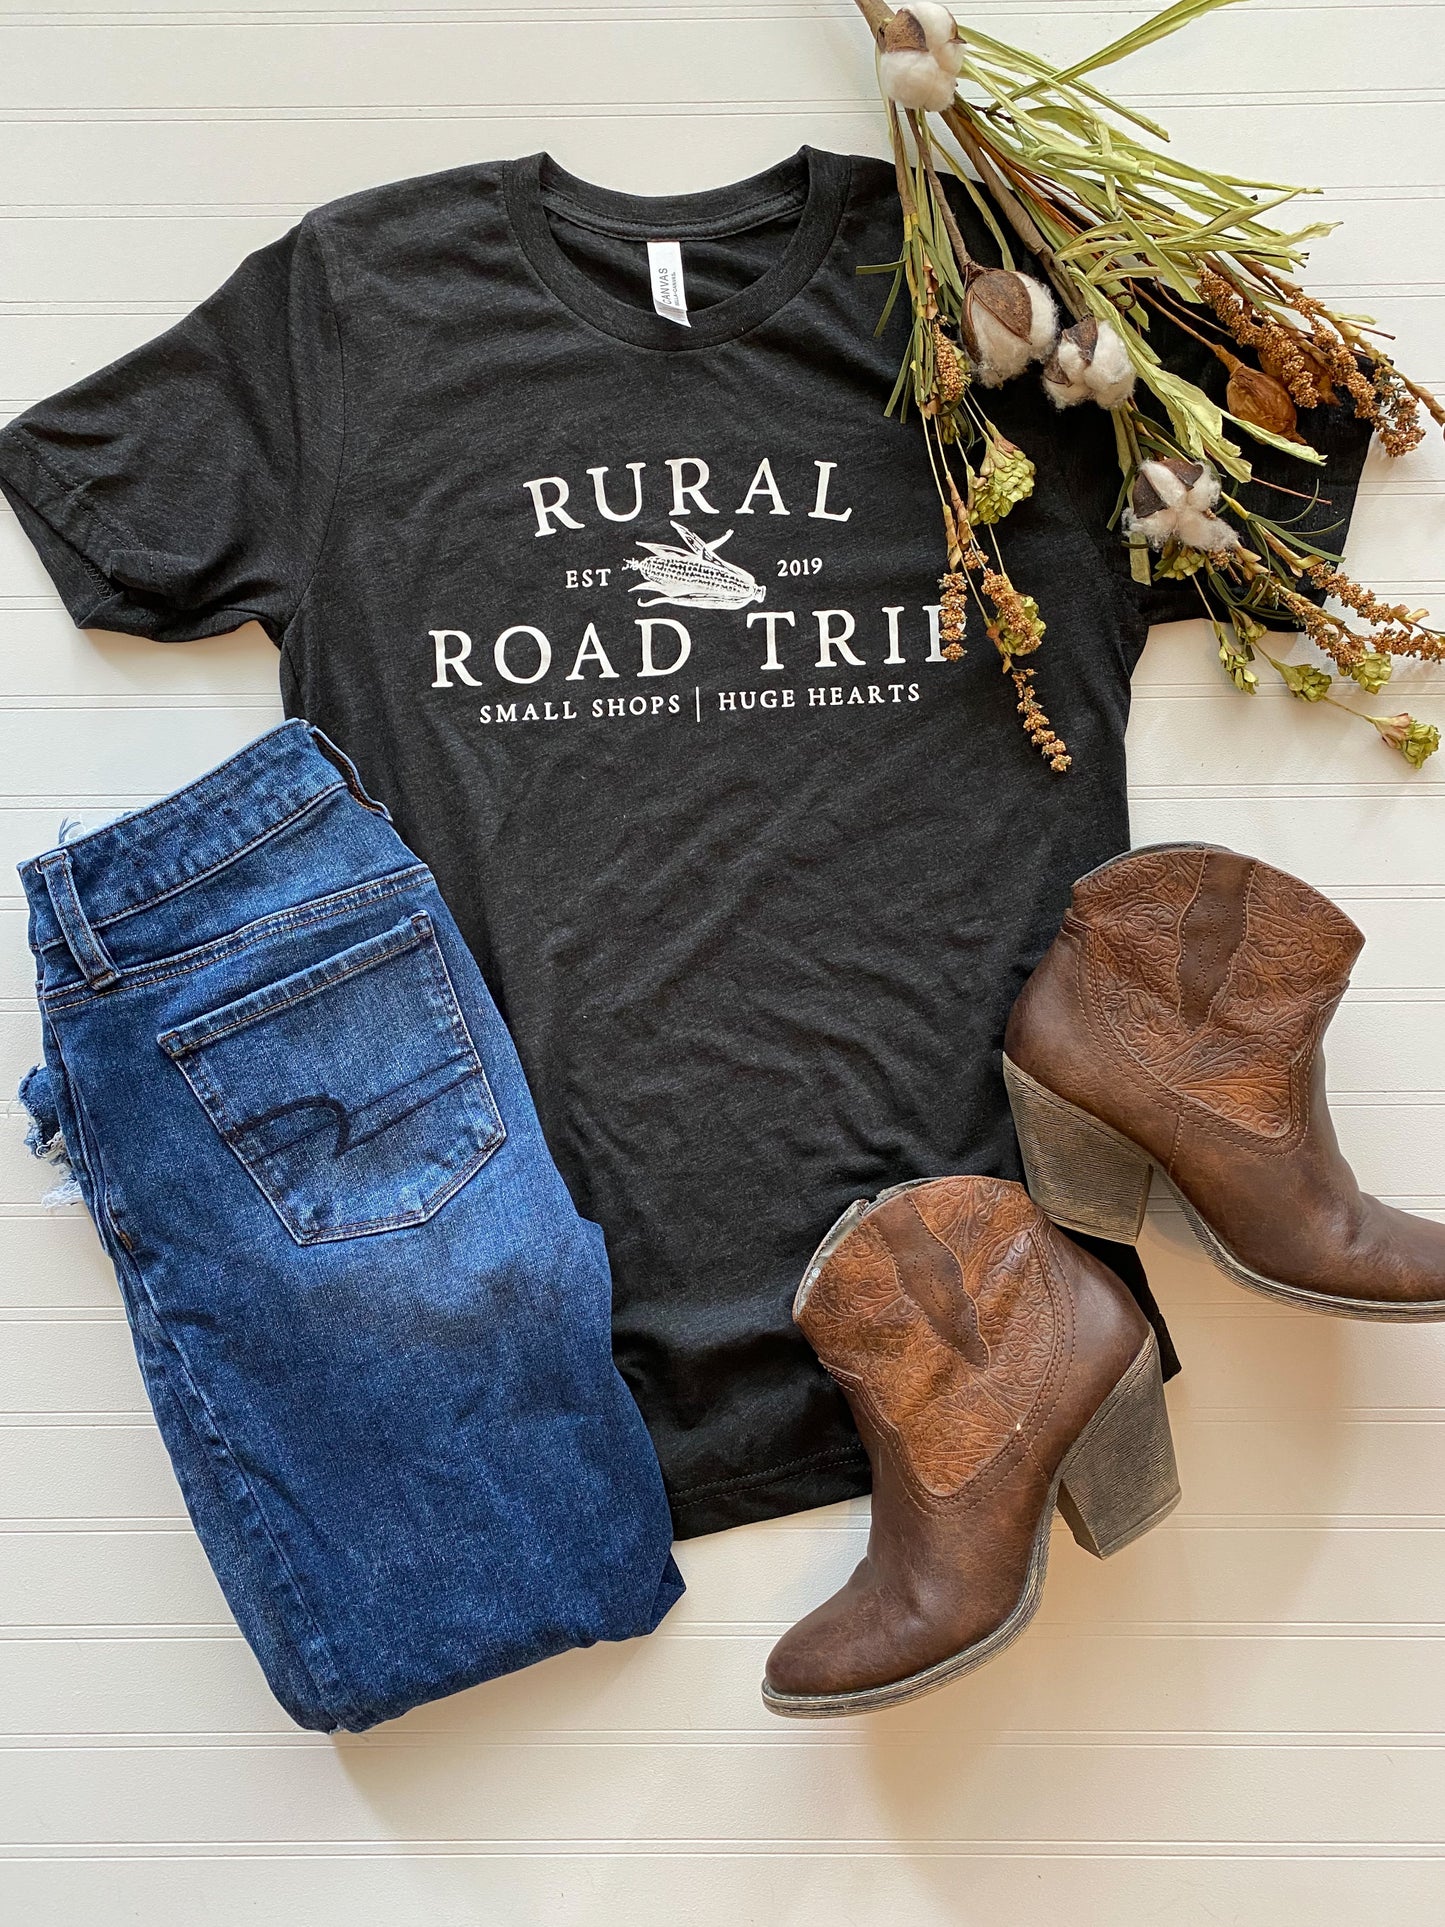 Rural Road Trip Shirts